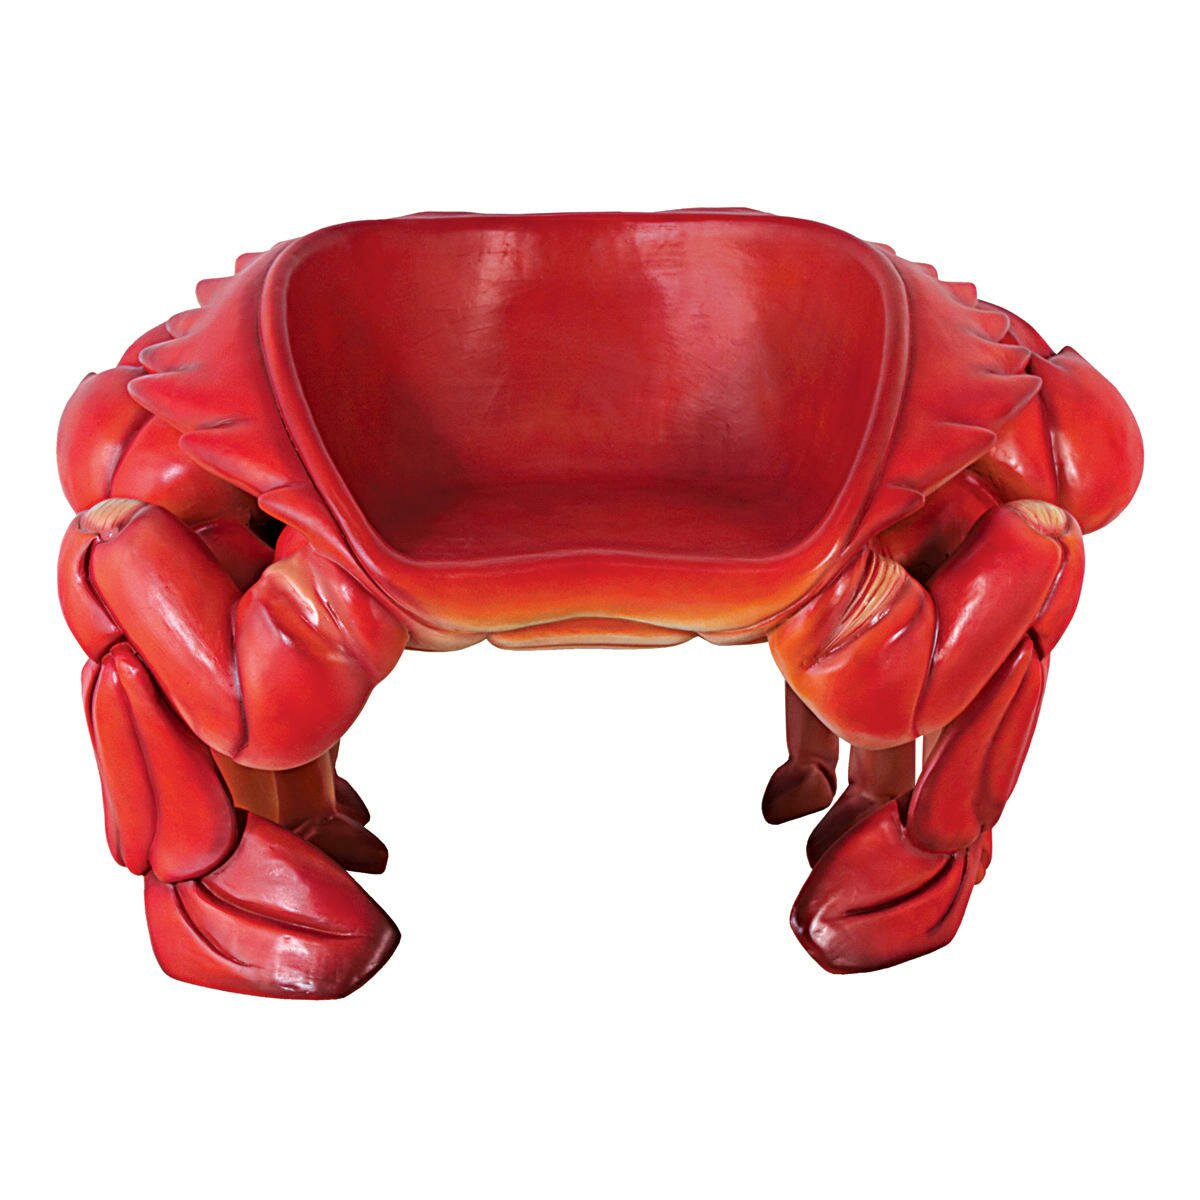 Giant King Crab Lounge Chair - Weird crab chair